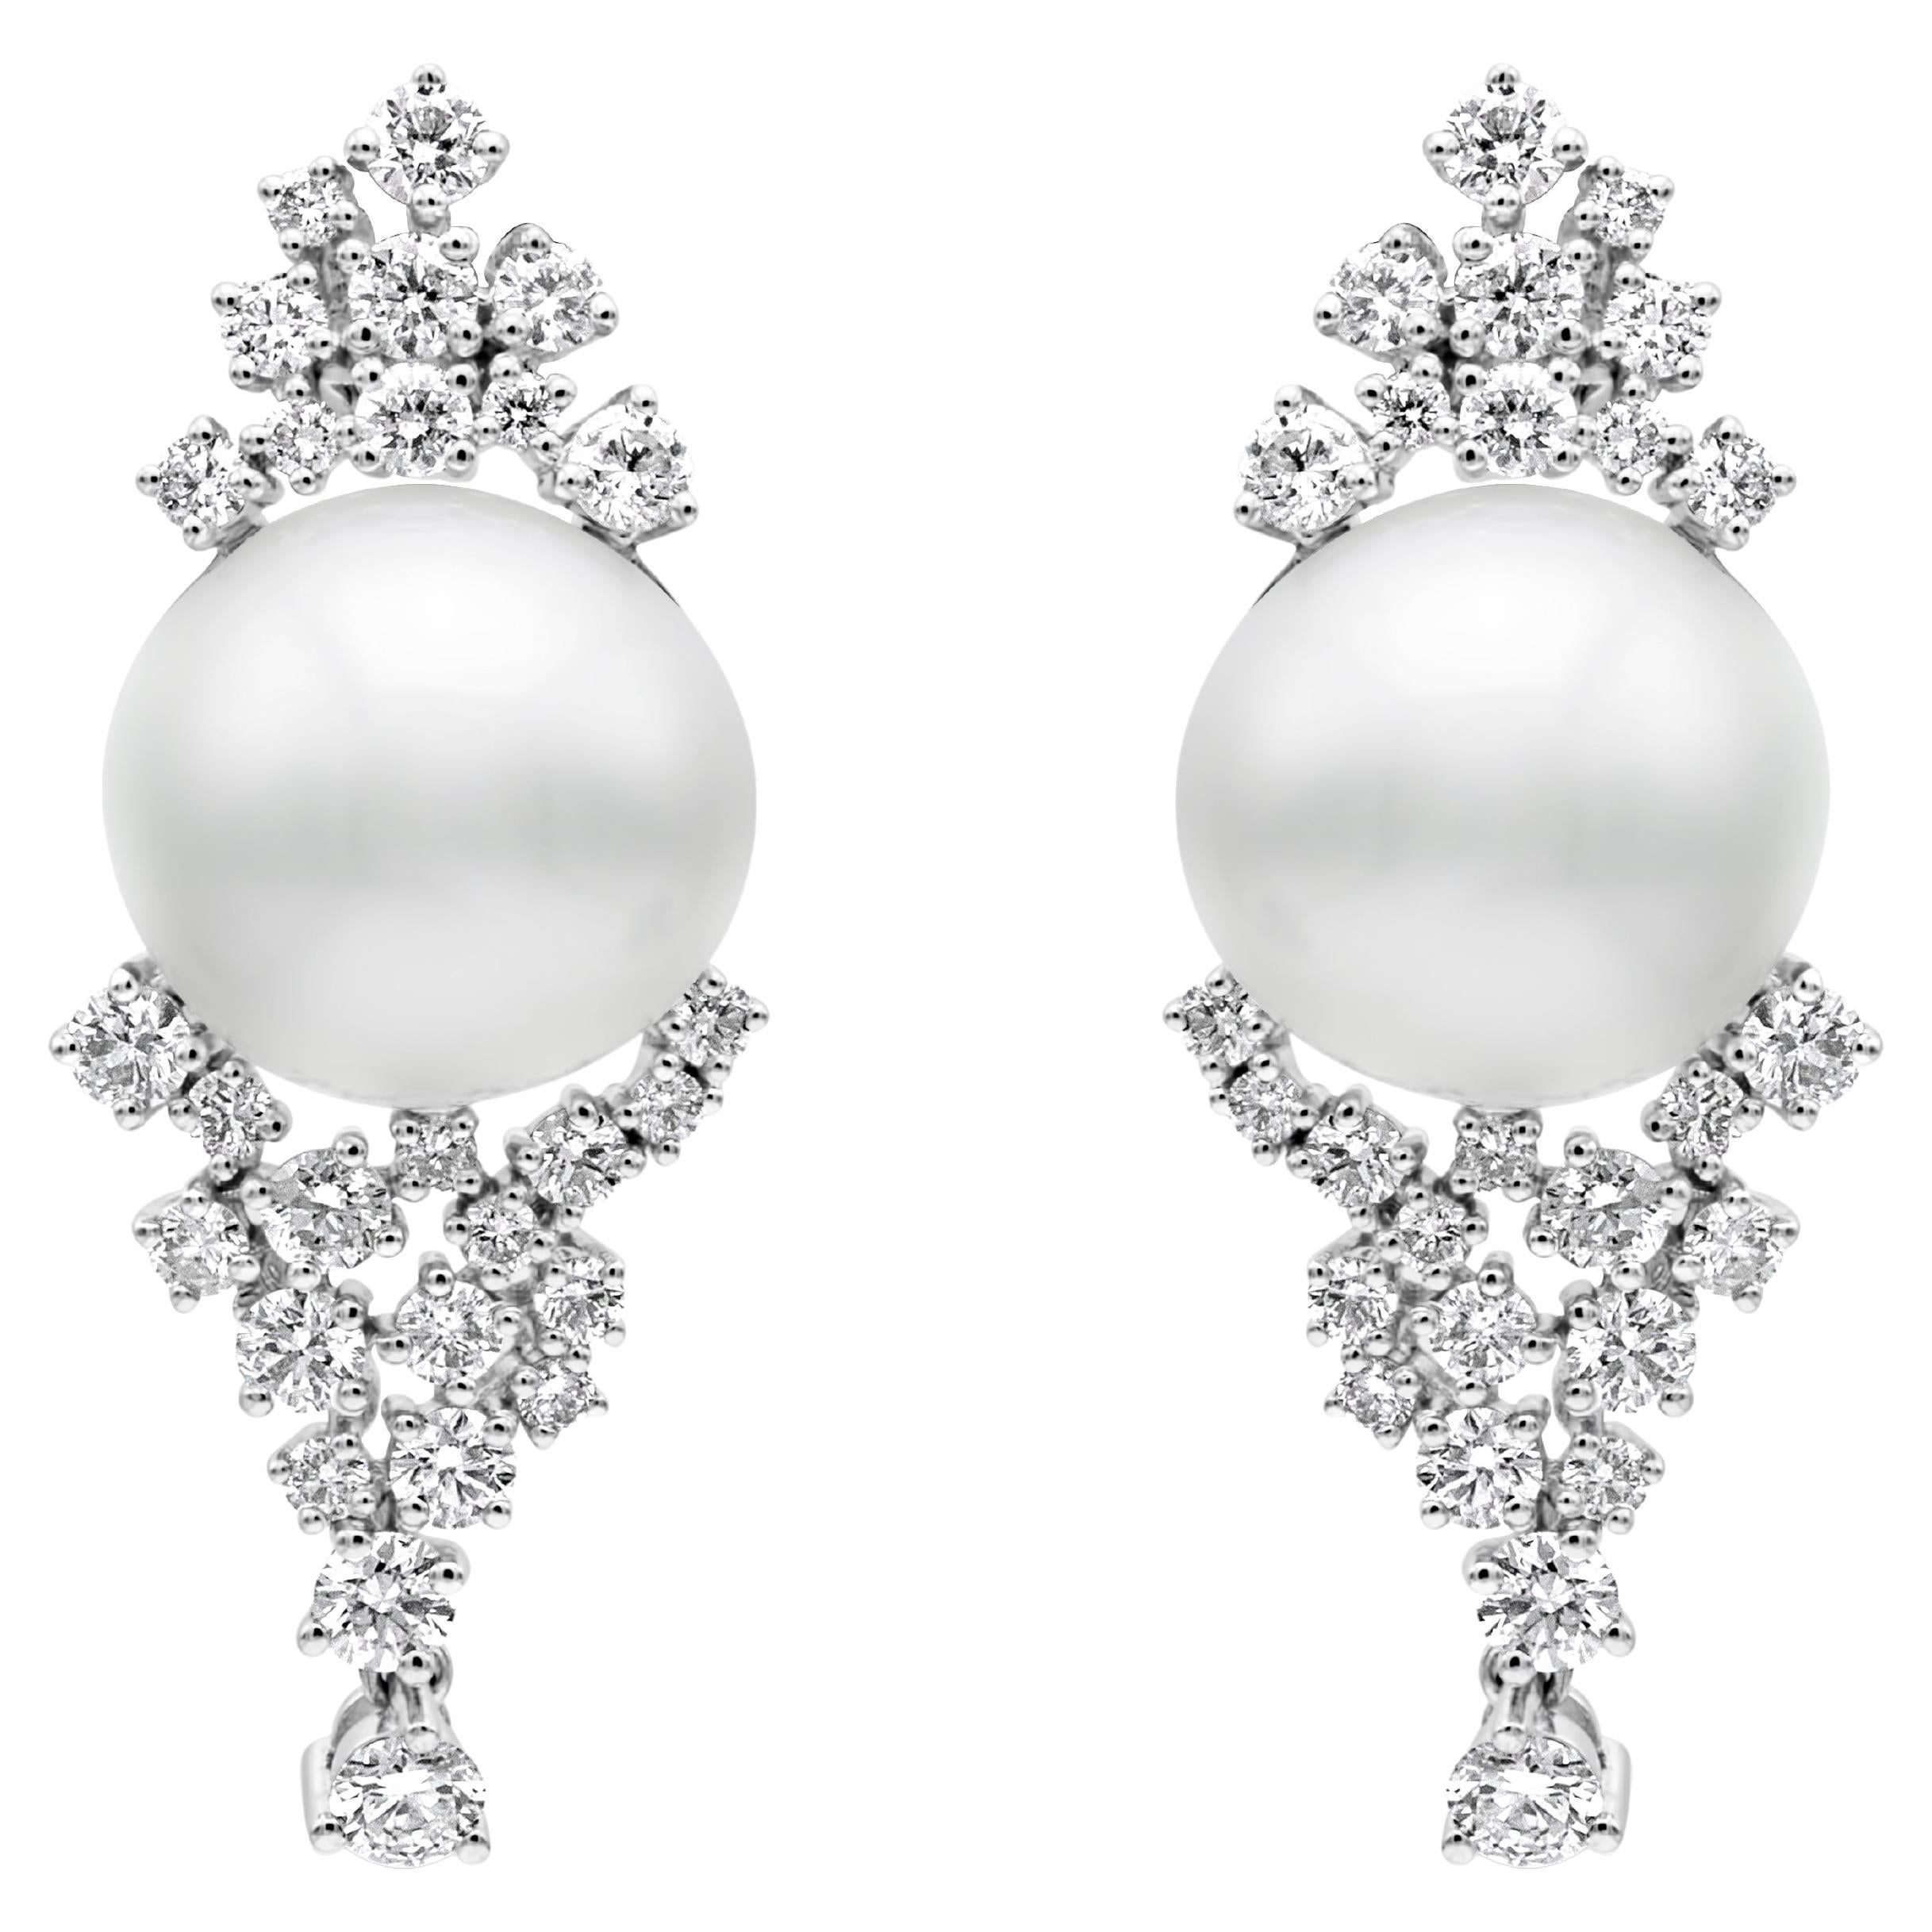 Roman Malakov 2.56 Carat Diamond and South Sea Pearl Stud Earrings